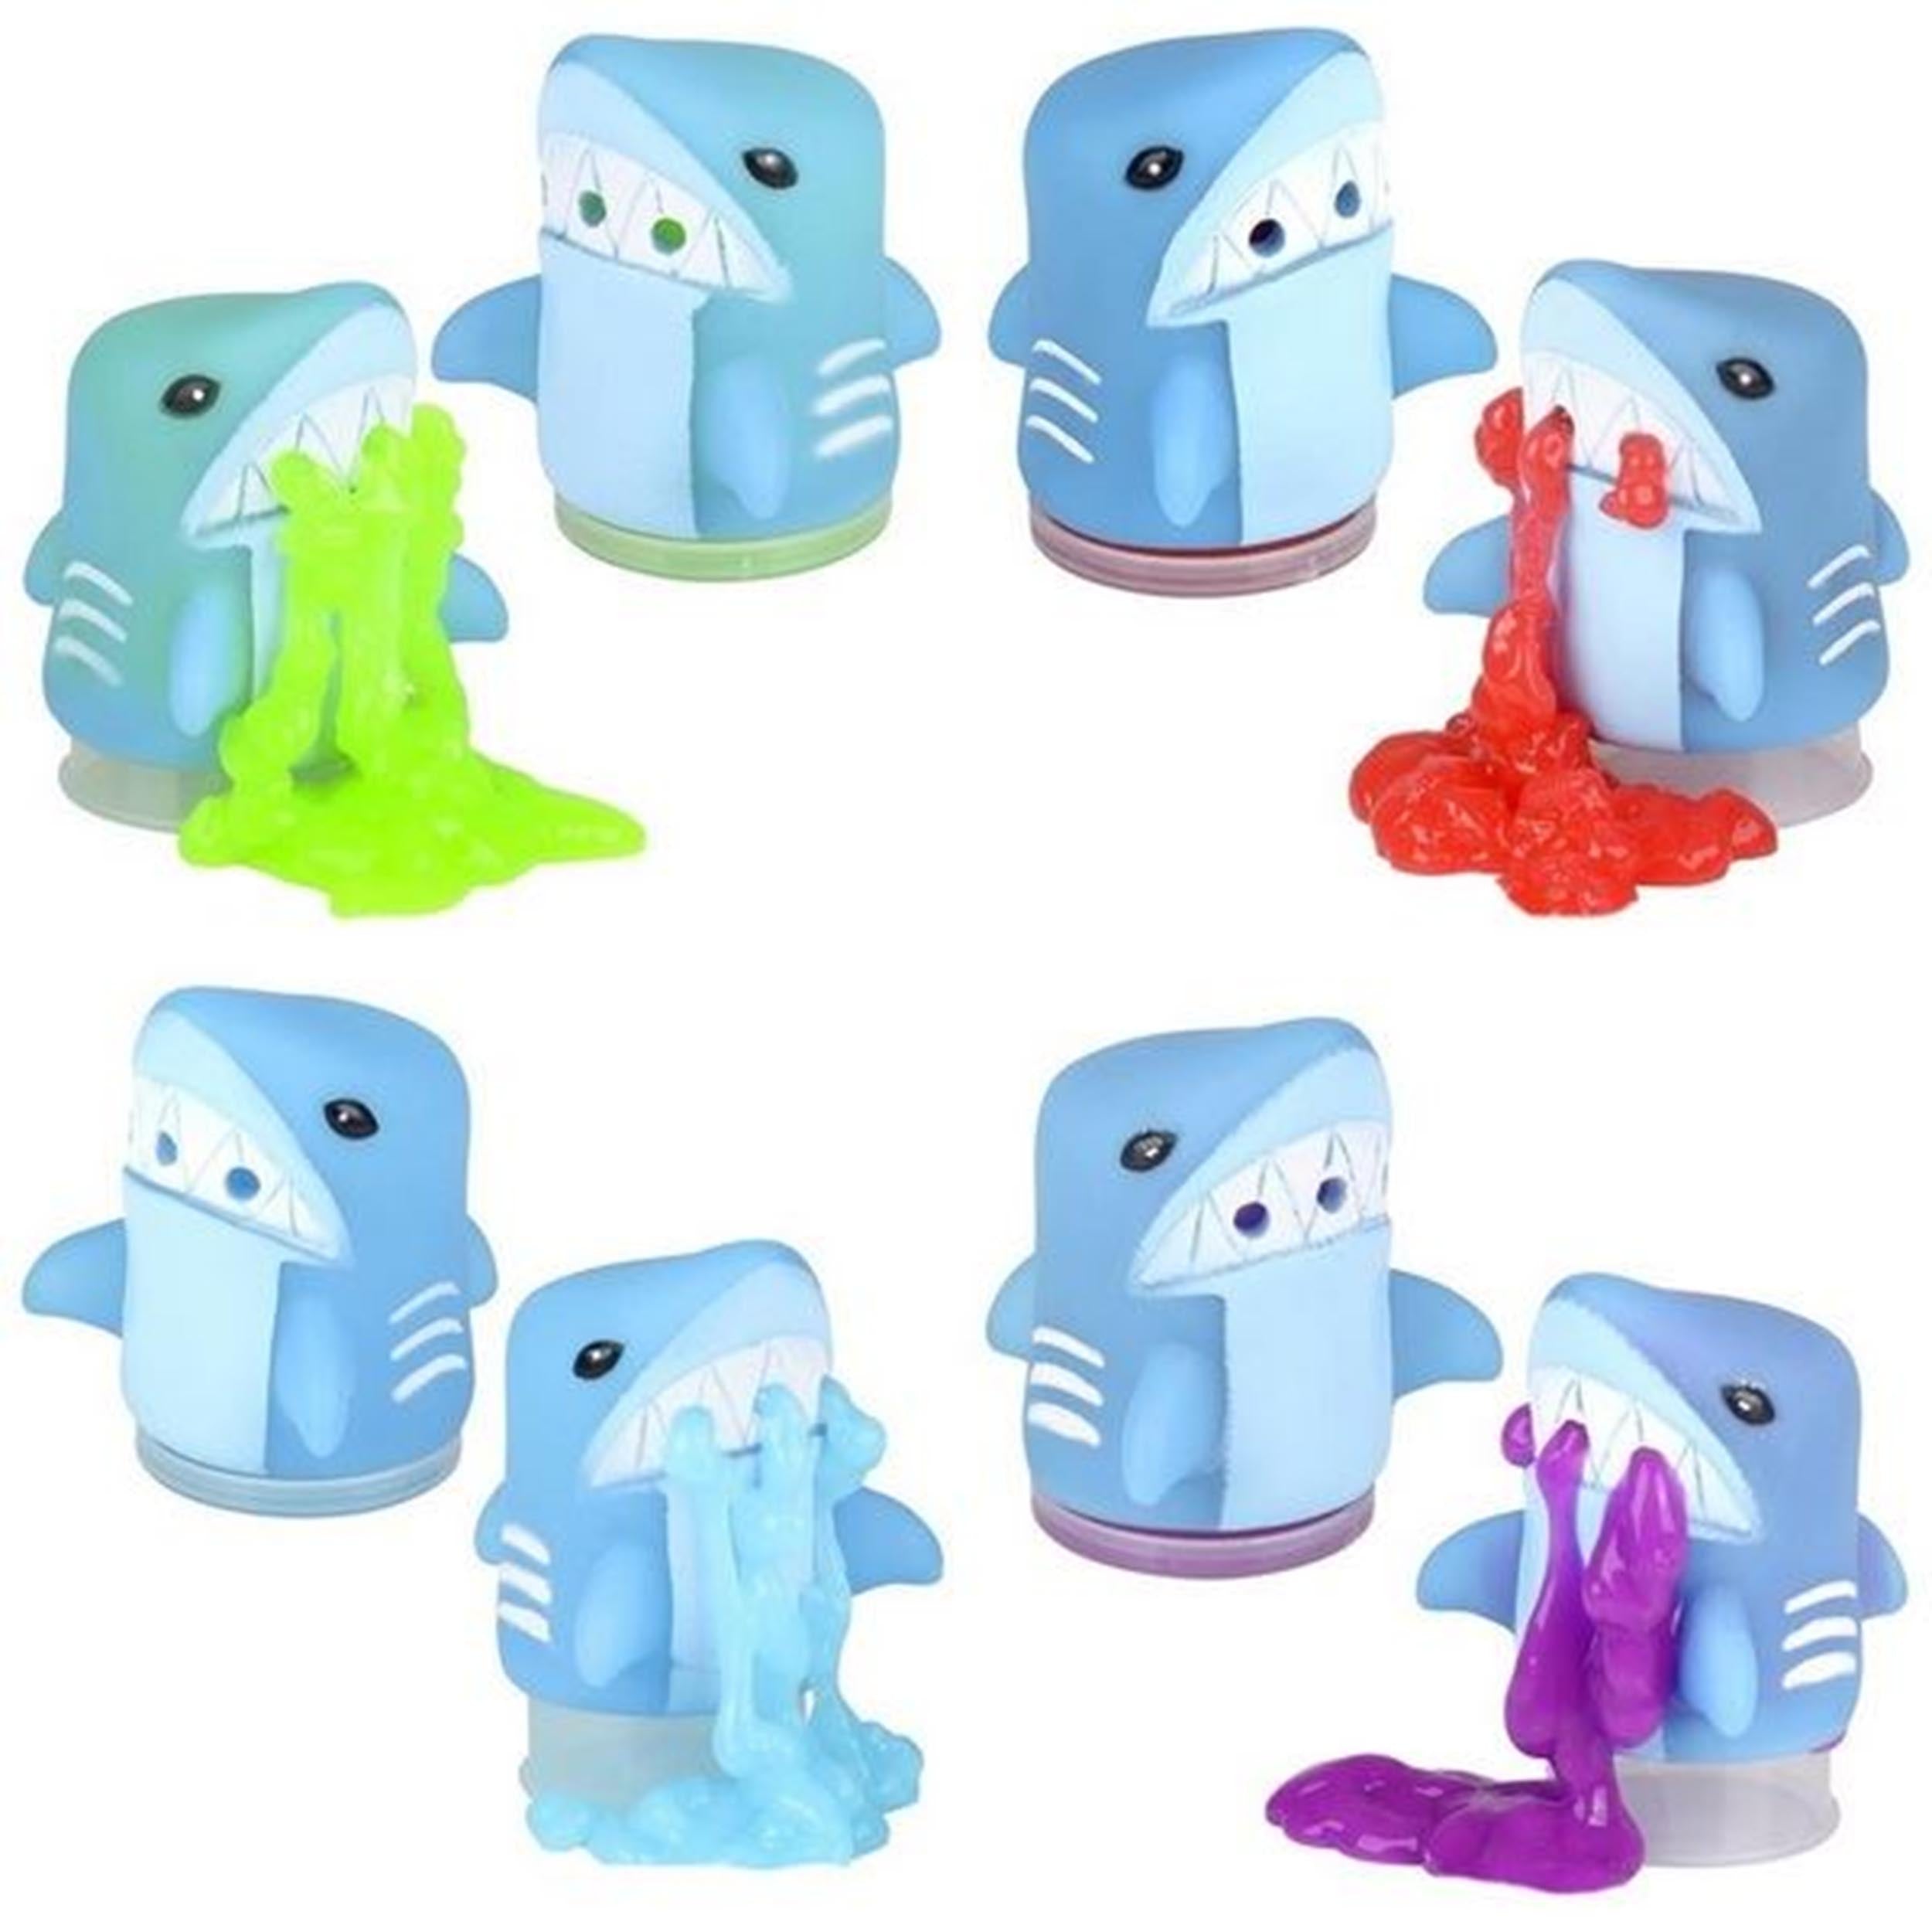 Squeeze Shark Slime kids toys (1 Dozen=$34.99)